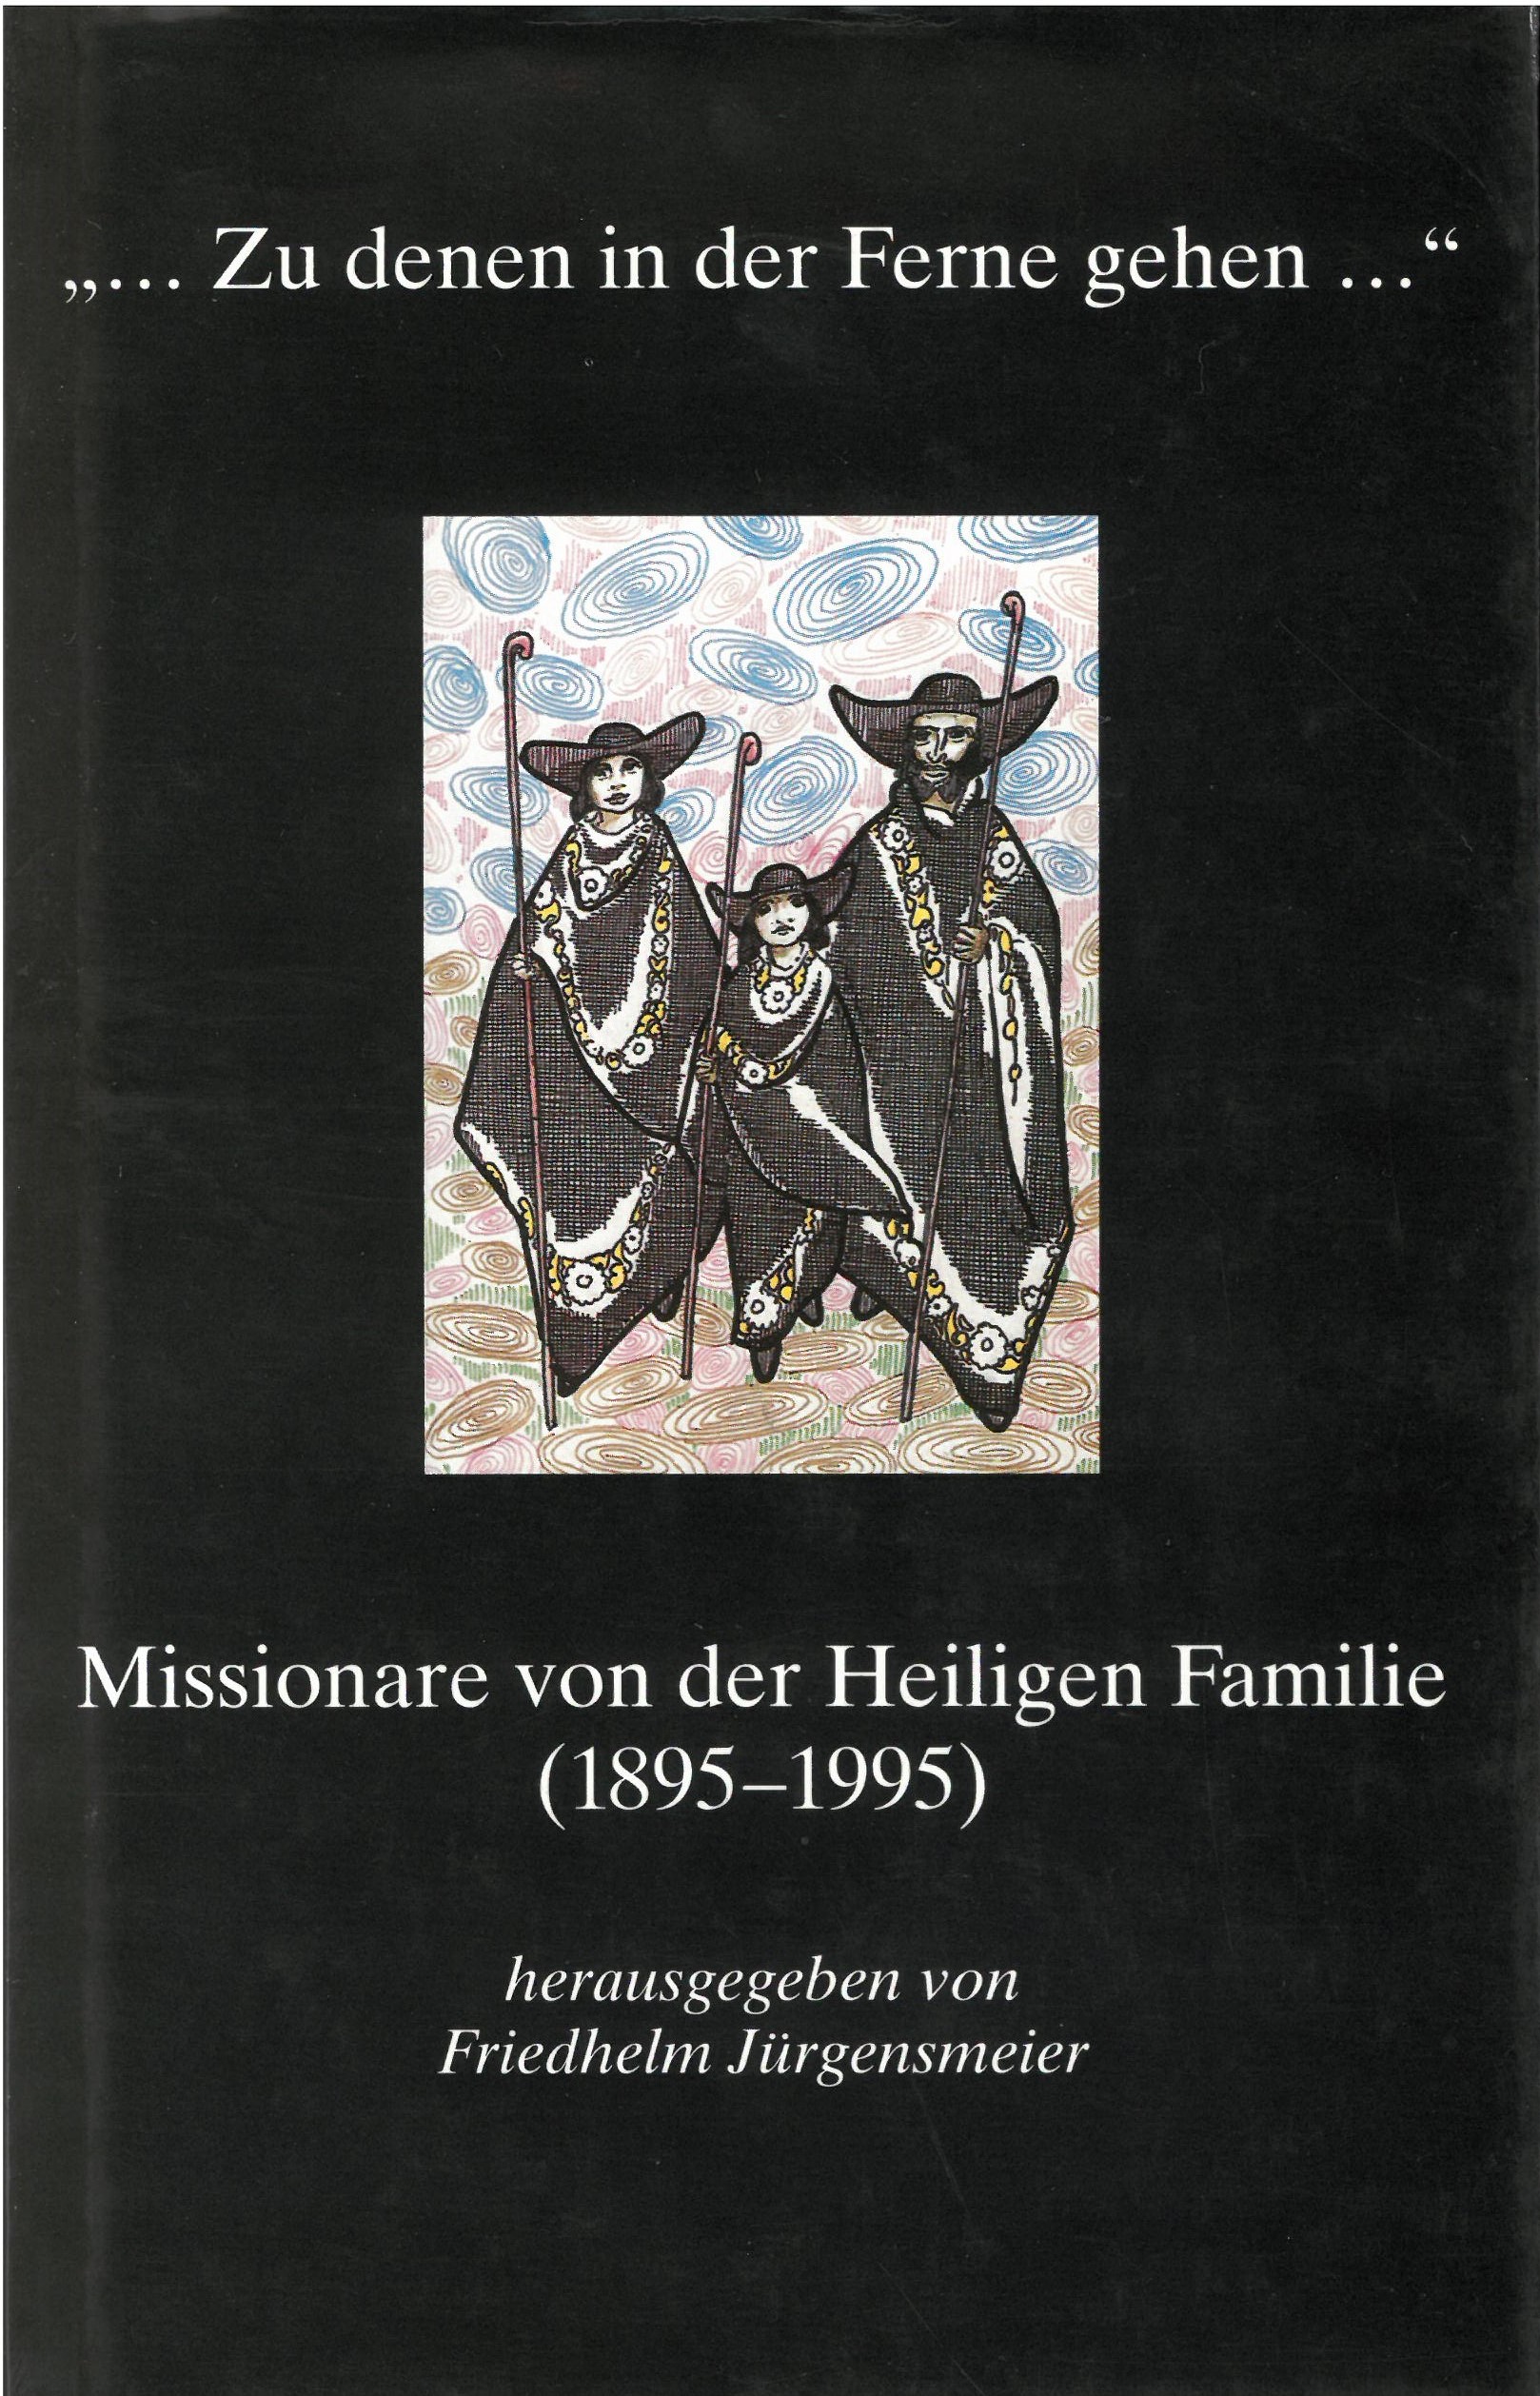 MSF (c) Missionshaus Hl. Familie / IMKG